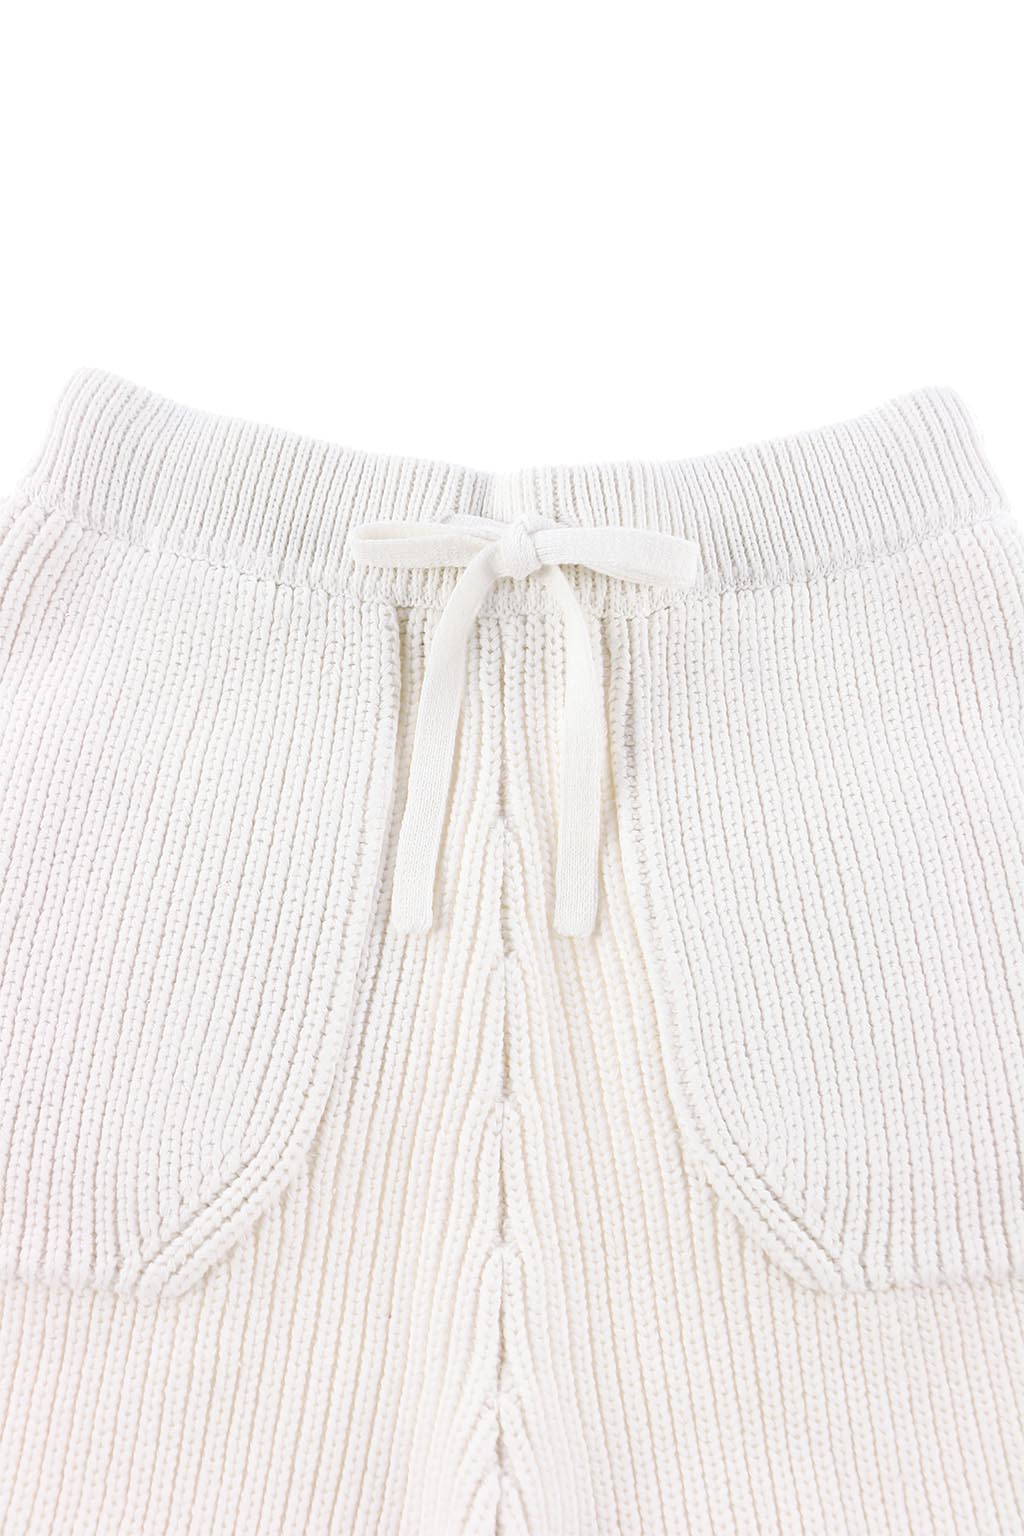 knit-short-pants-white-09